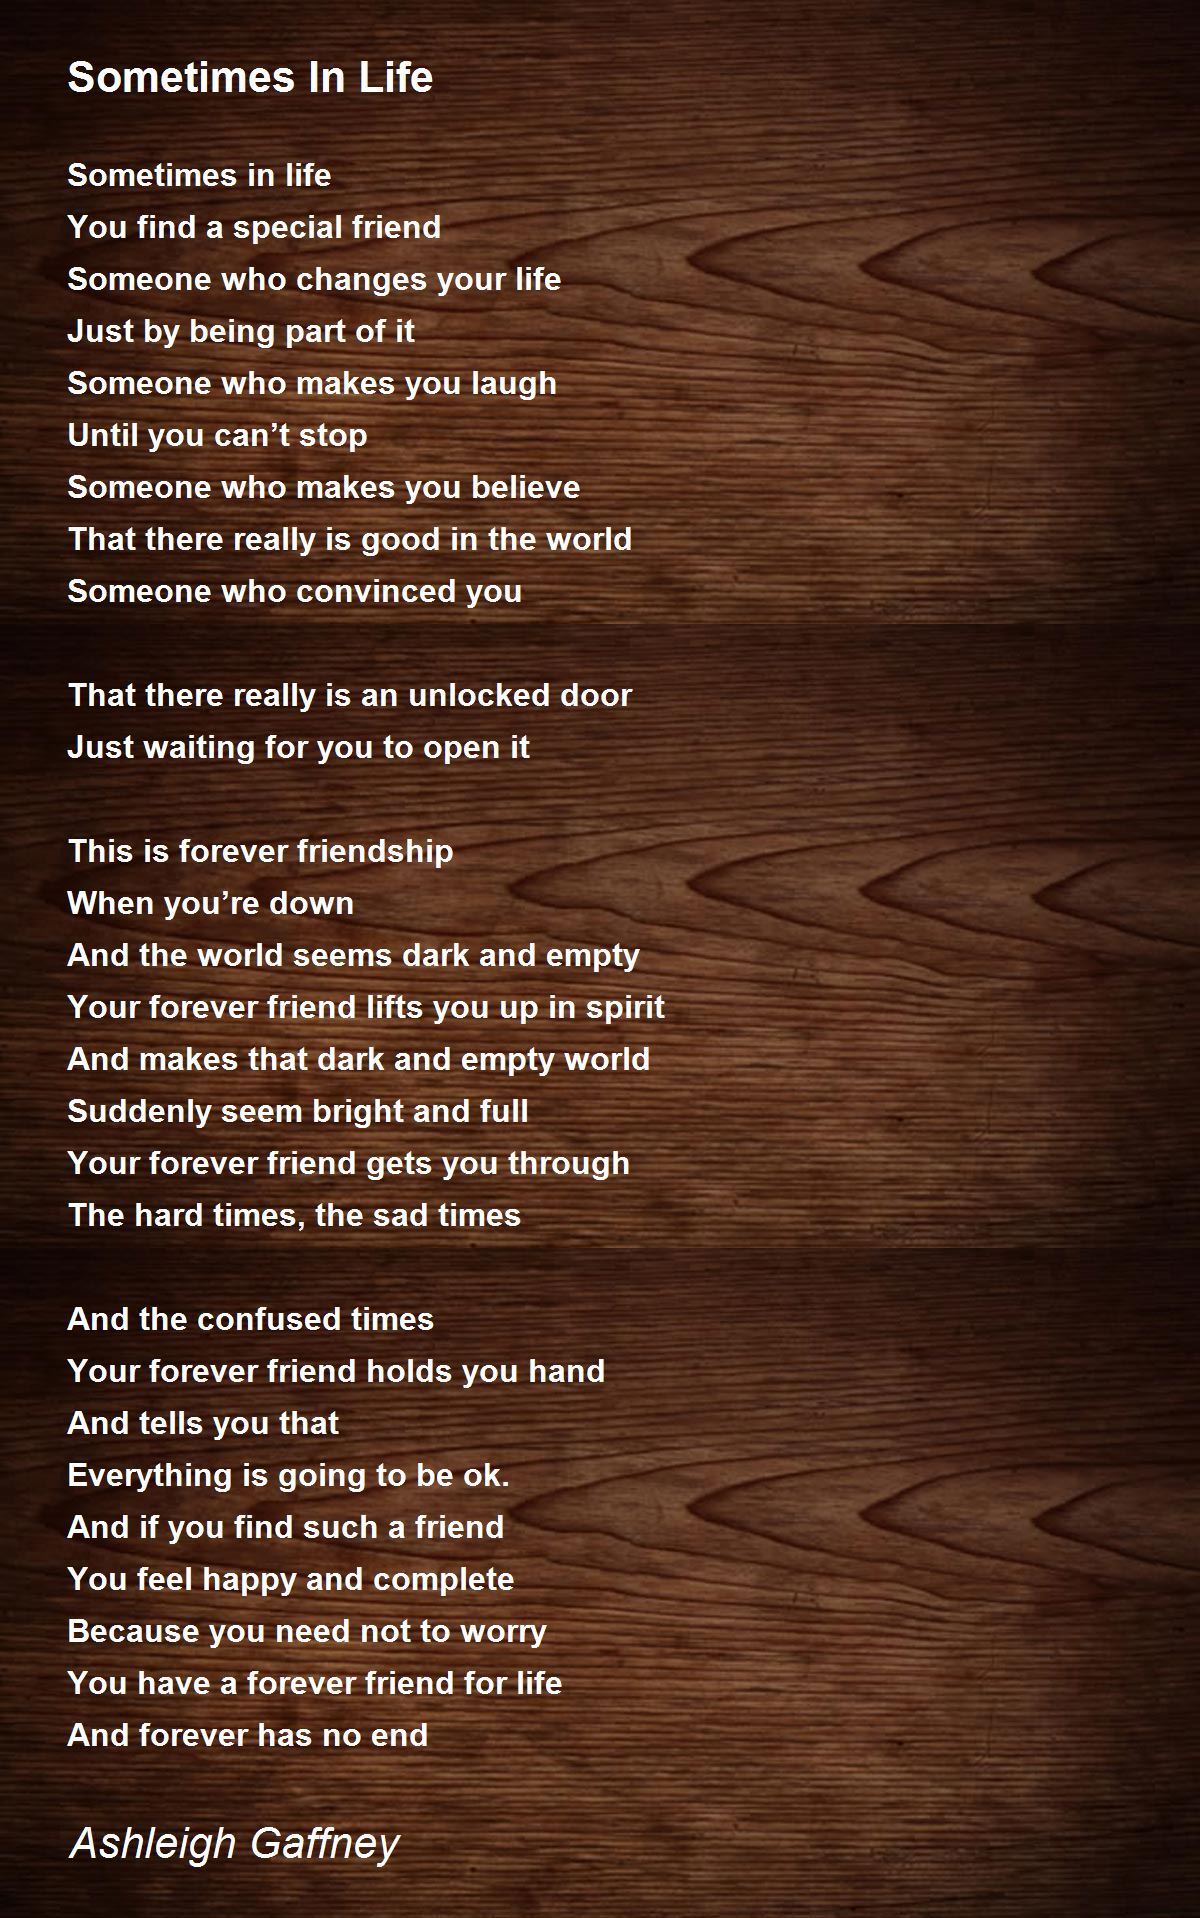 Sometimes In Life Poem by Ashleigh Gaffney - Poem Hunter